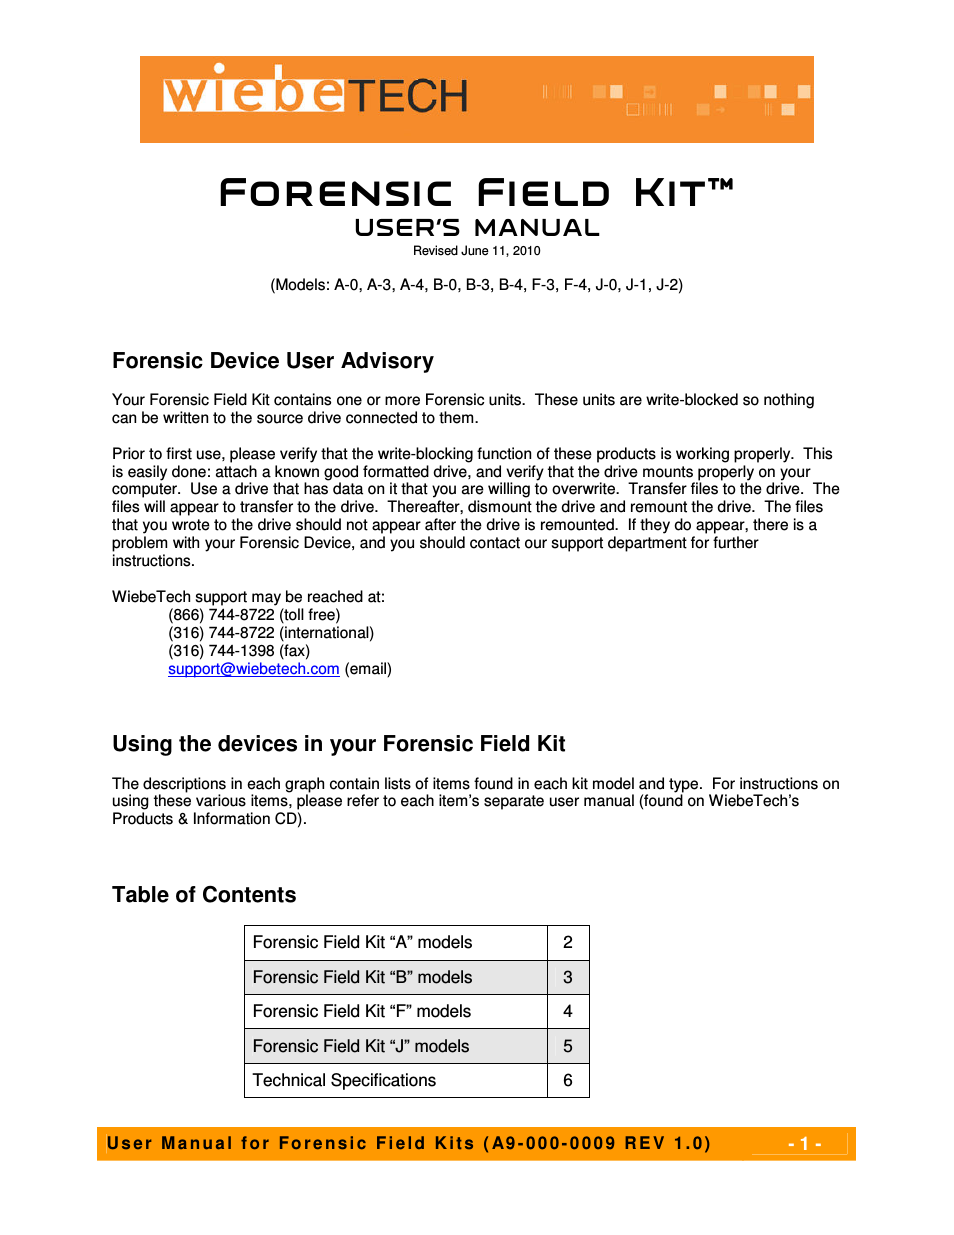 Forensic Field Kit J